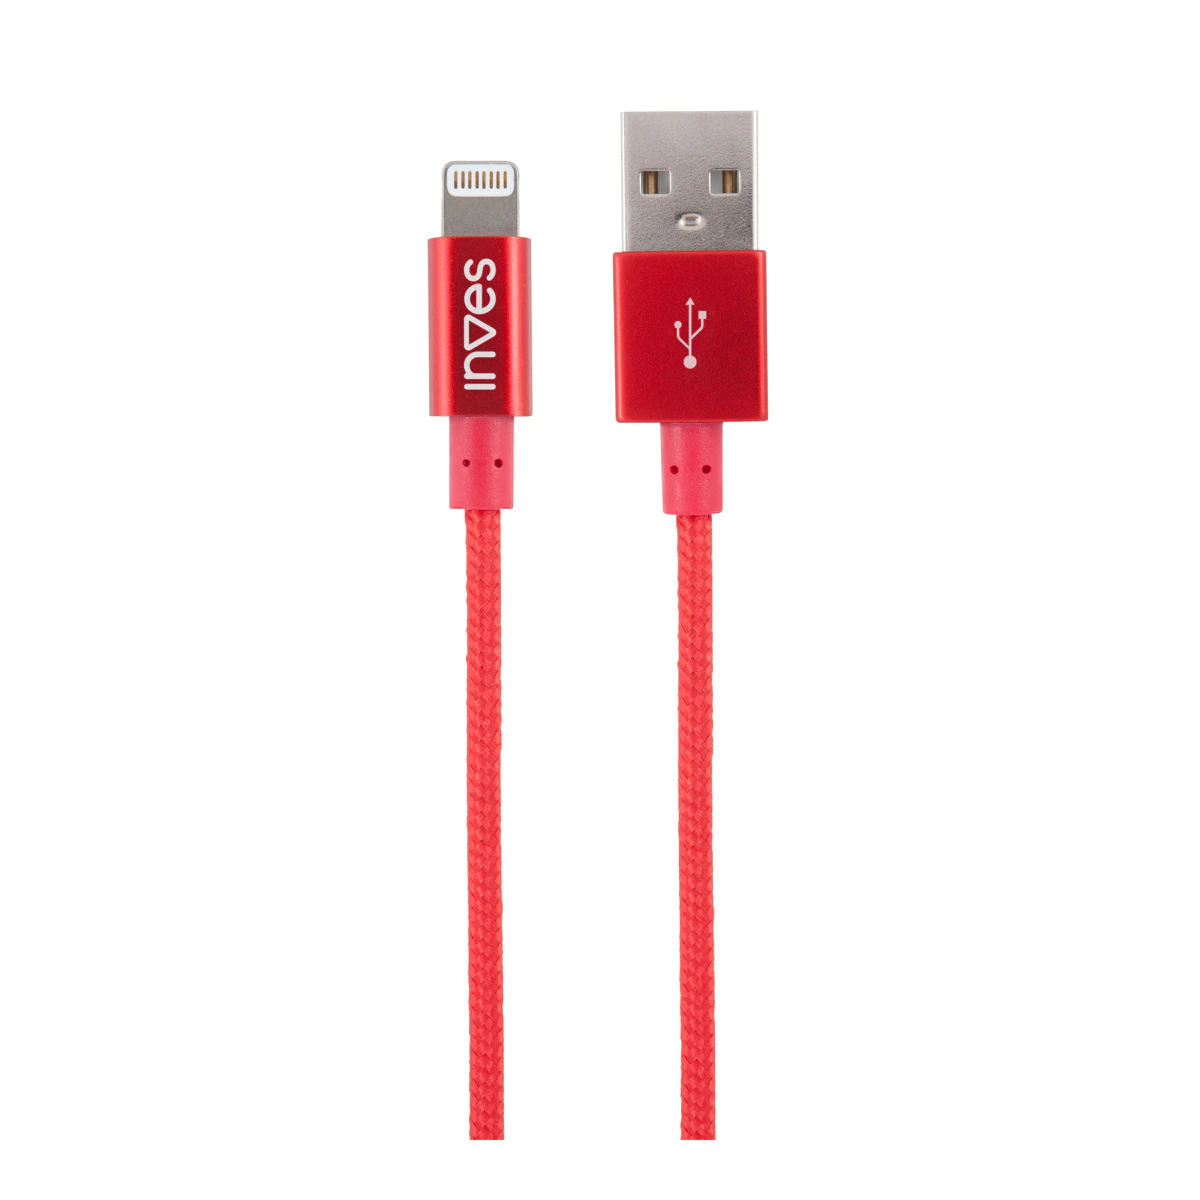 Cable Inves B1 Red de conector lightning a USB de 1 metro